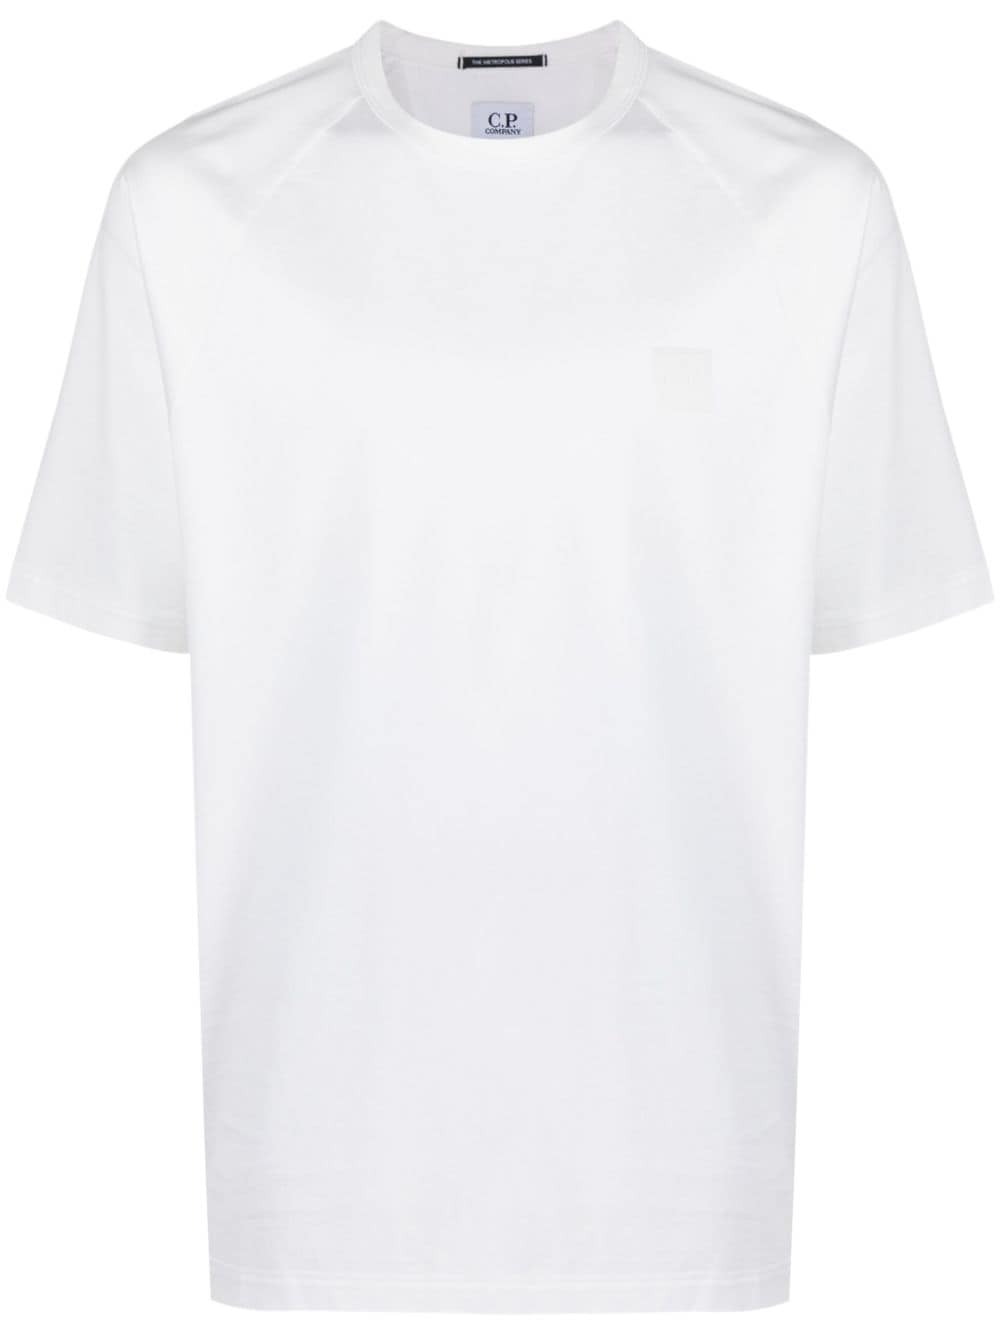 C.P. COMPANY 16CLTS020A00 Man White T-shirts and Polos - Zuklat